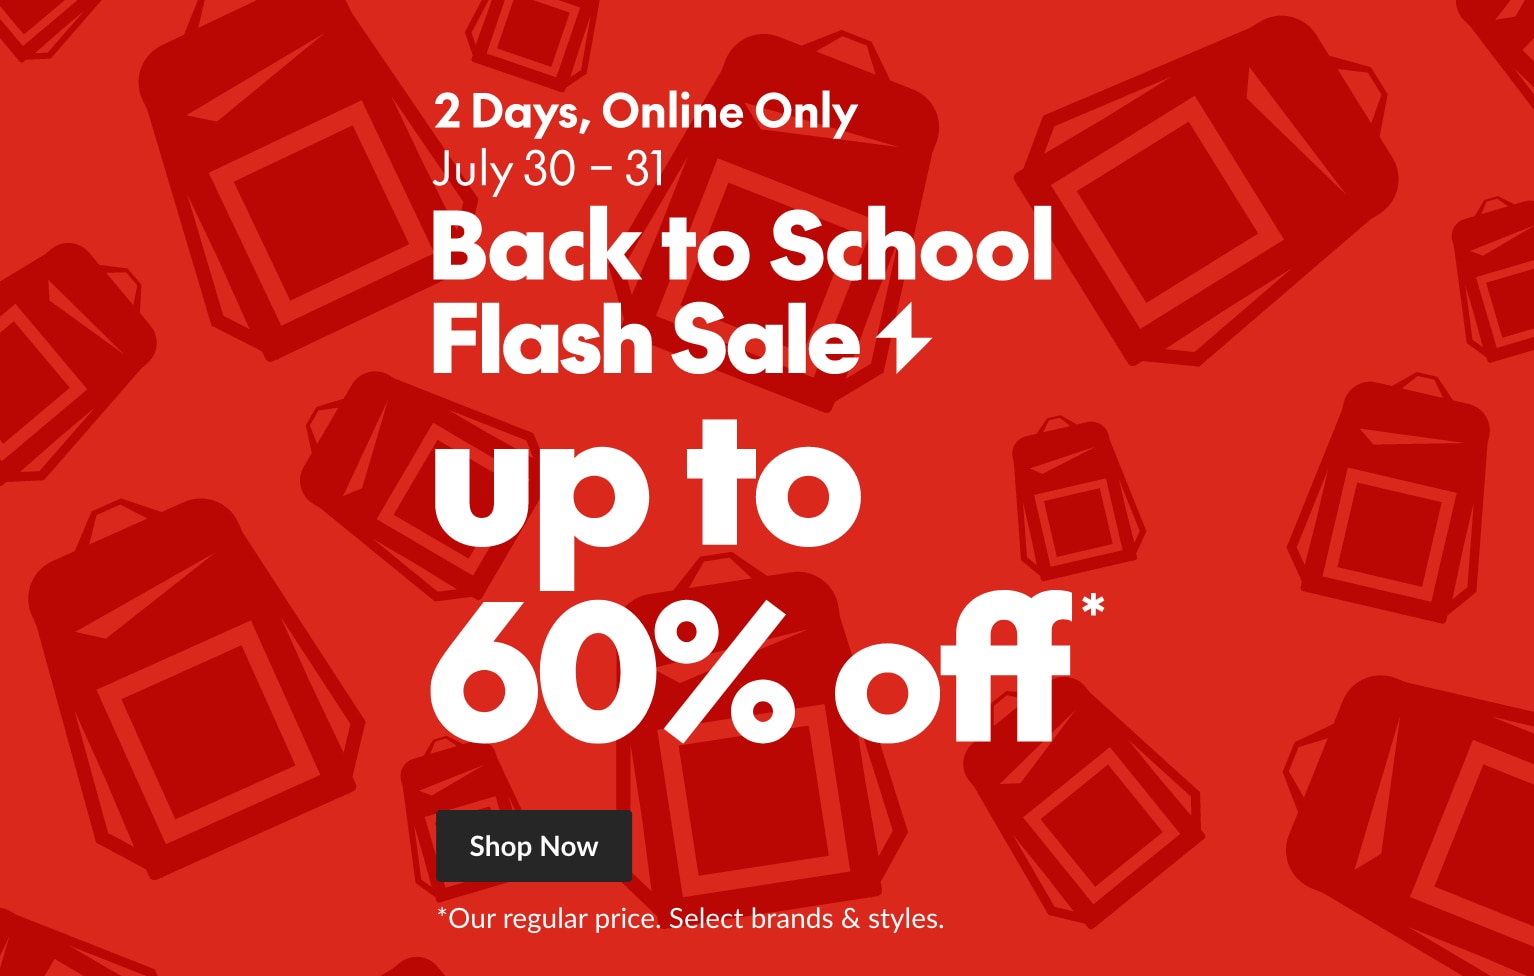 Back to School Flash Sale